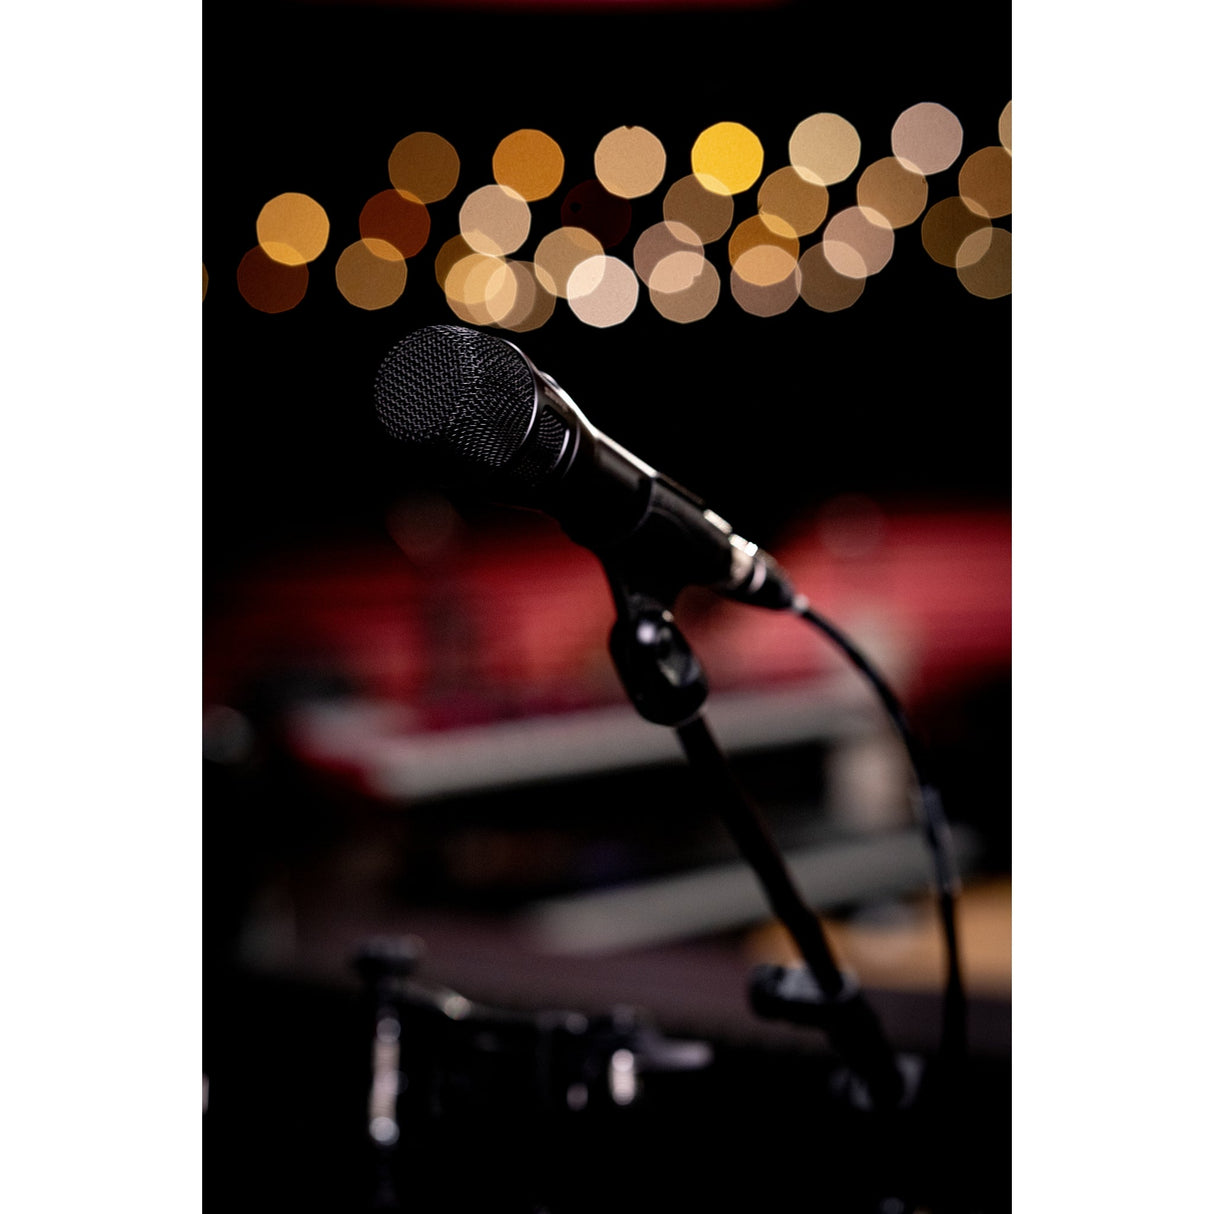 Shure NEXADYNE NXN8/C Cardioid Dynamic Vocal Handheld Microphone